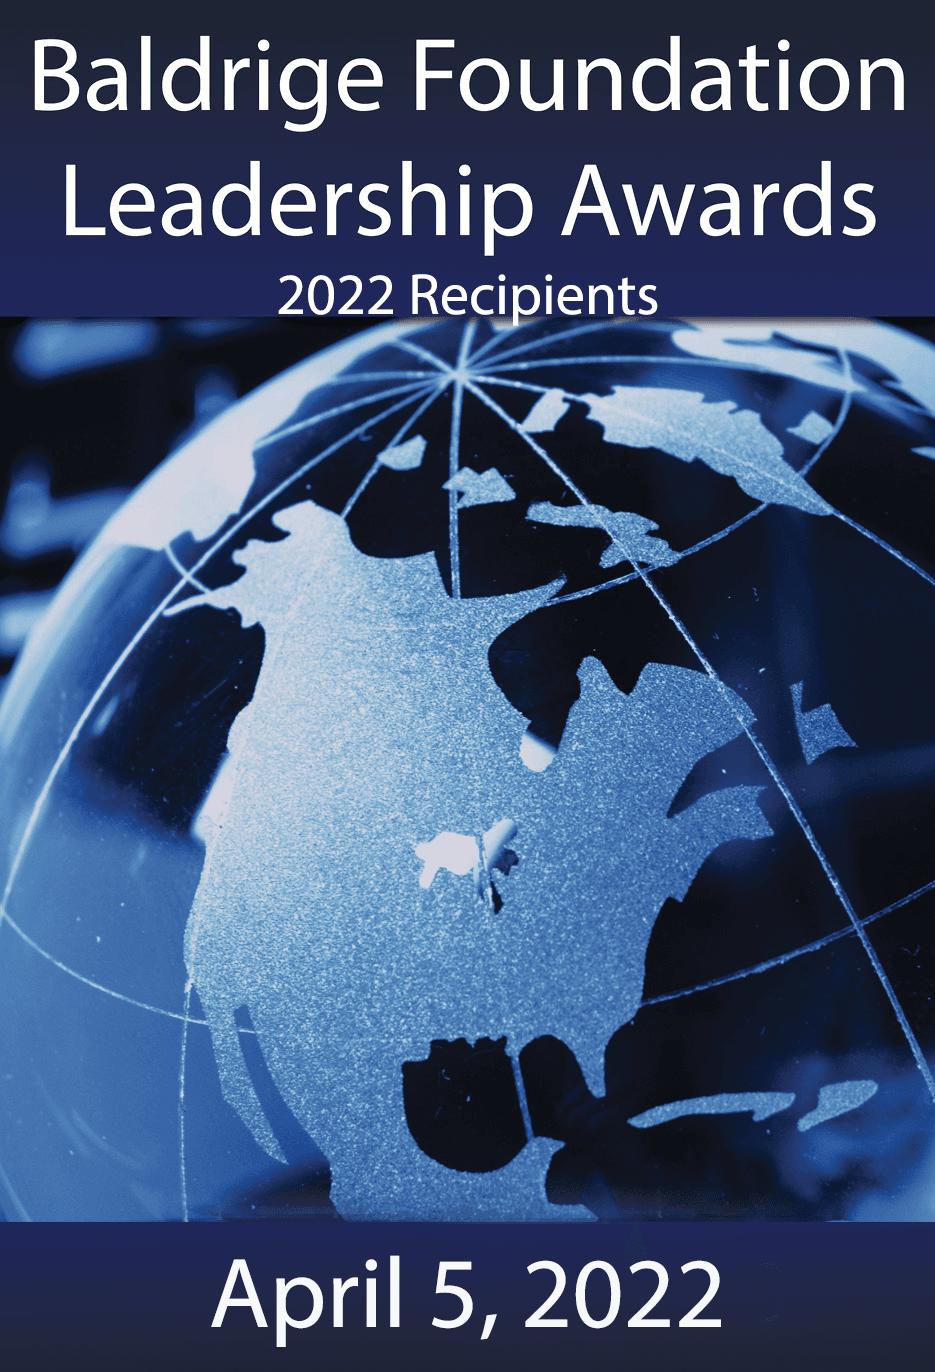  Baldrige Foundation Announces 2022 Leadership Award Recipients